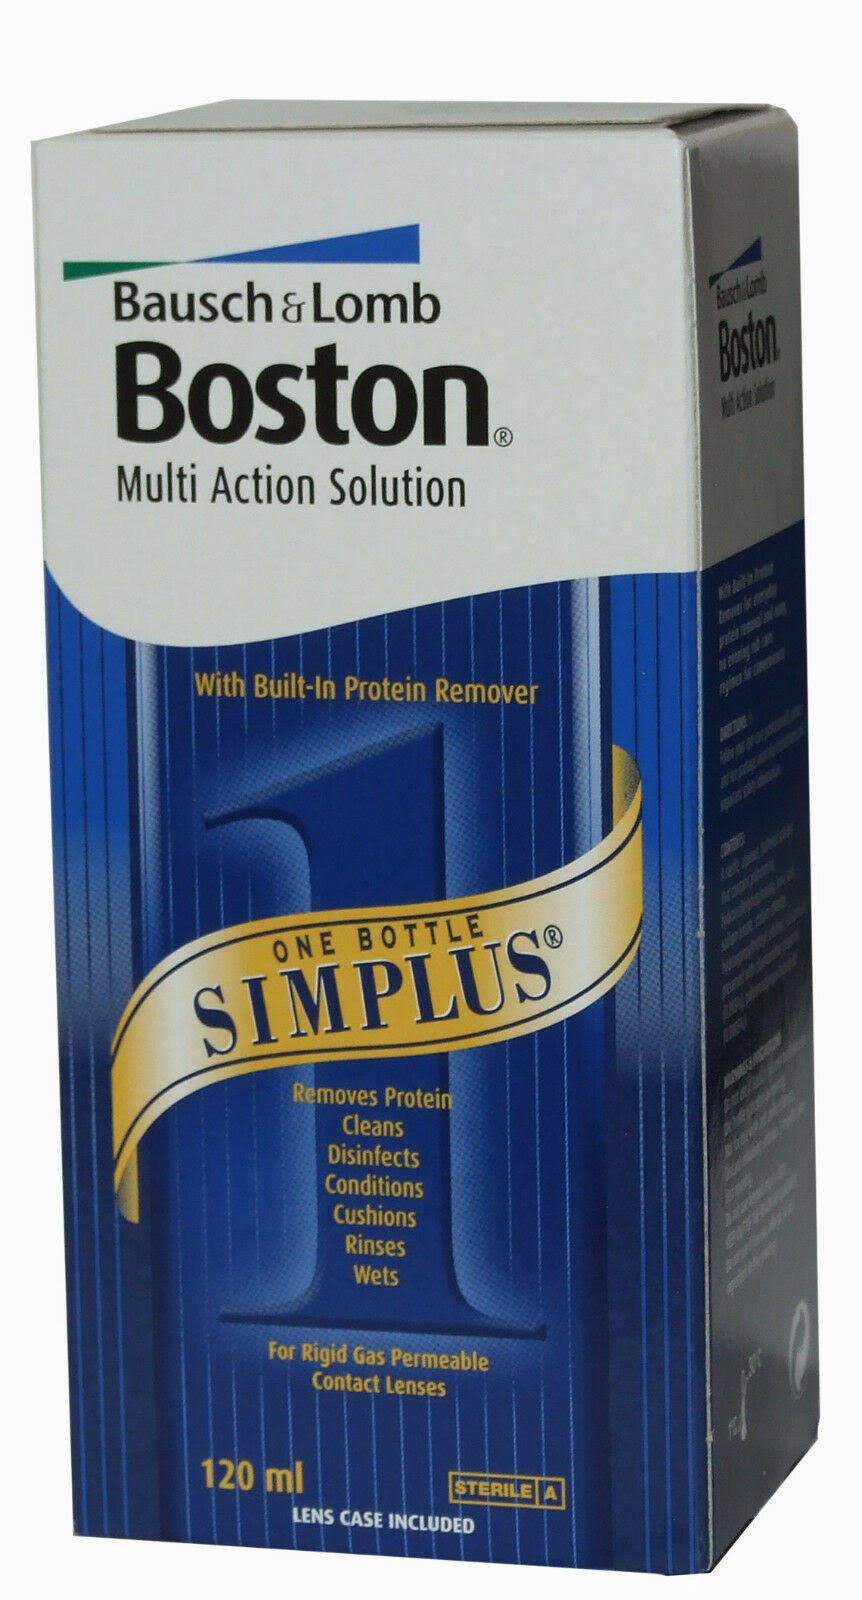 Boston Simplus Multi Action Solution - 120ml